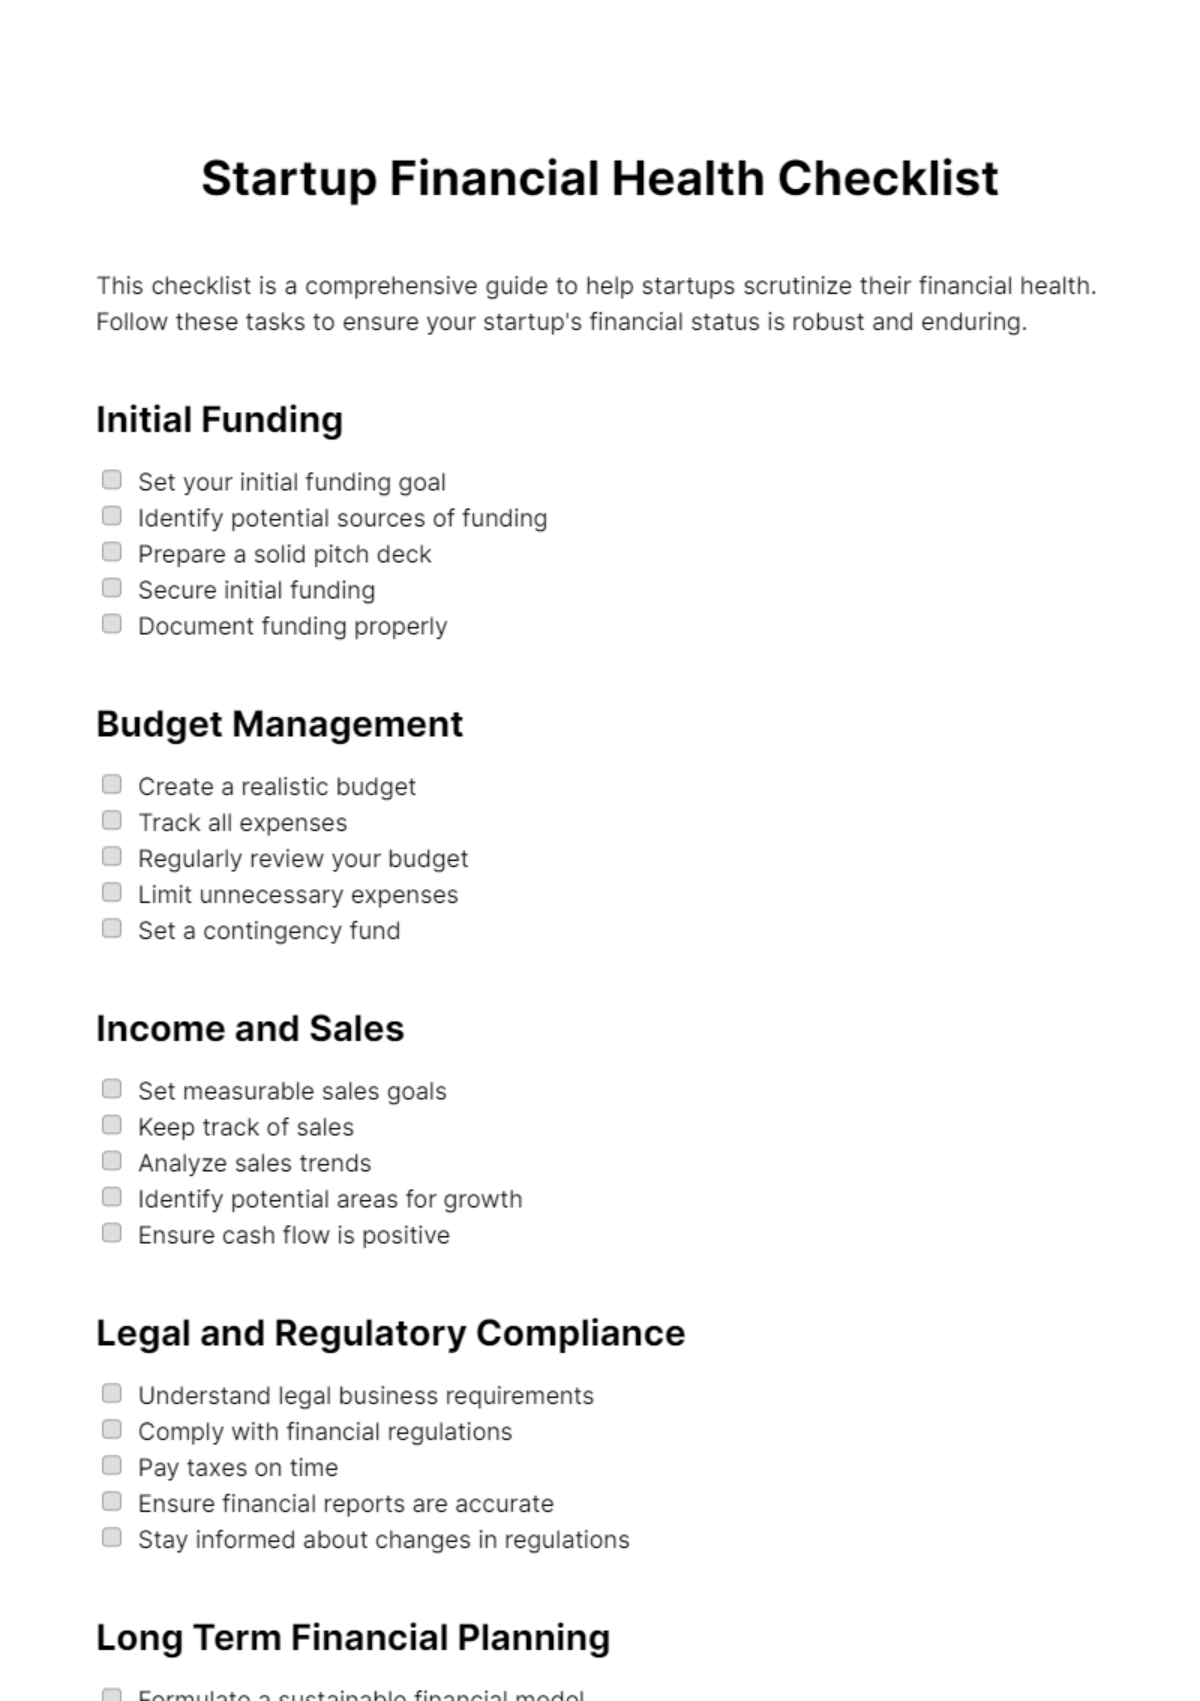 Startup Financial Health Checklist Template